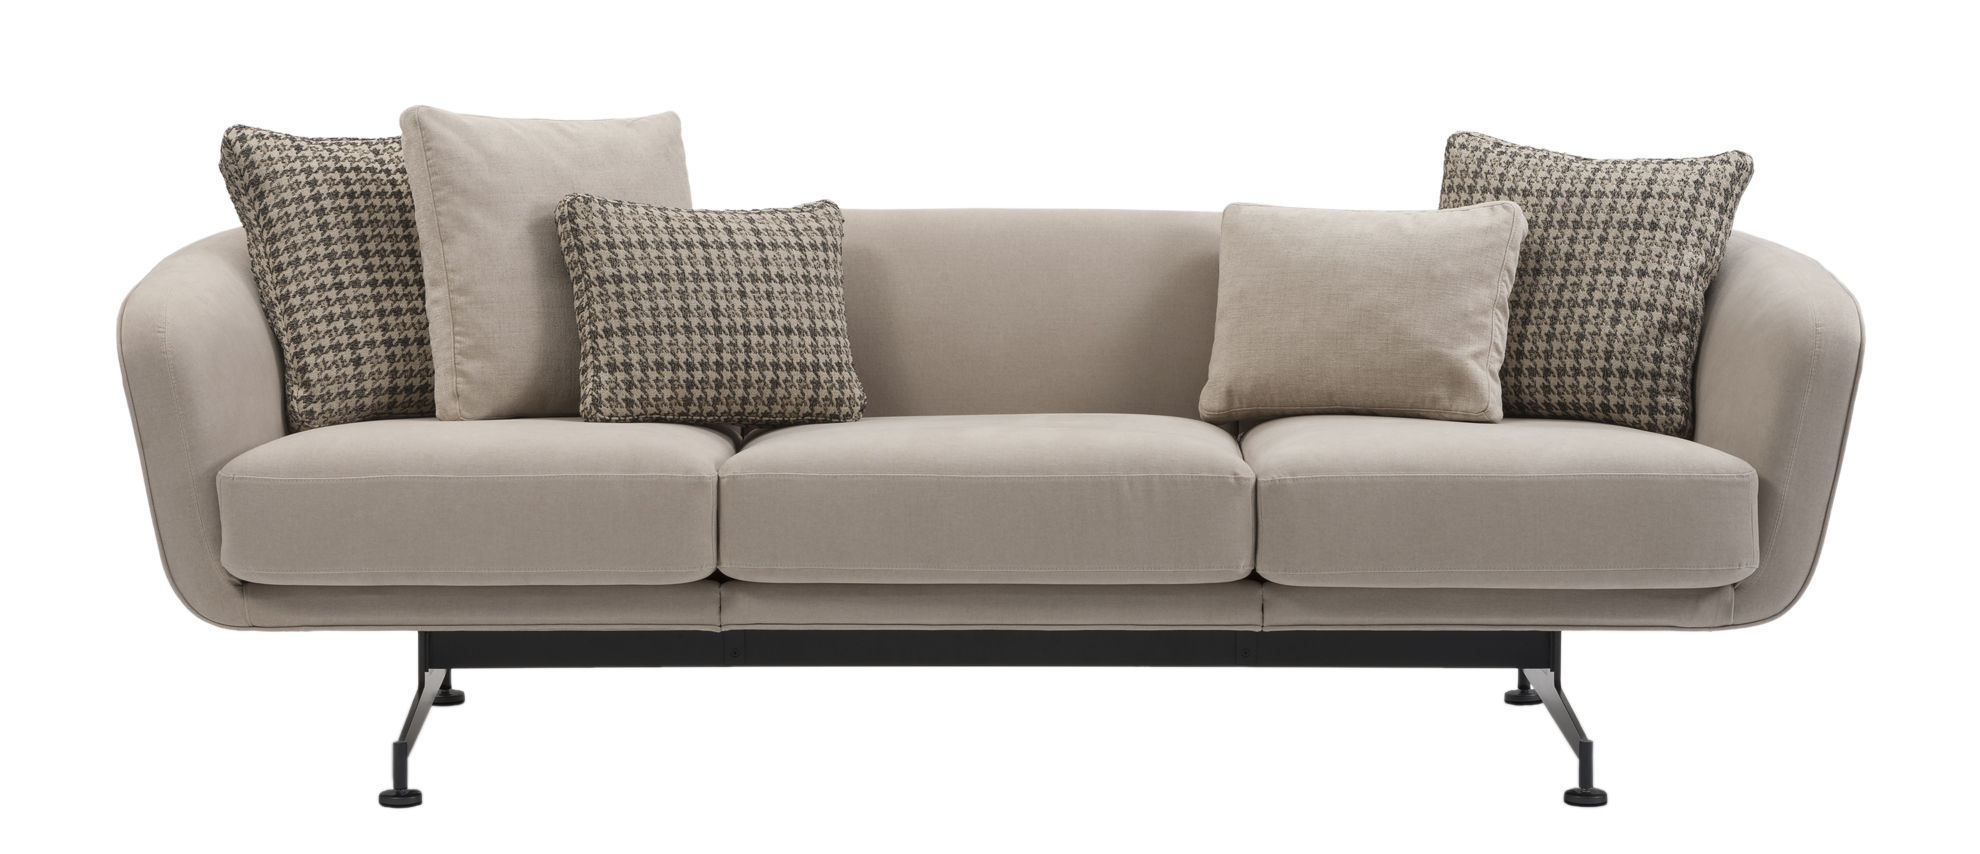 canapé sofa betty kartell